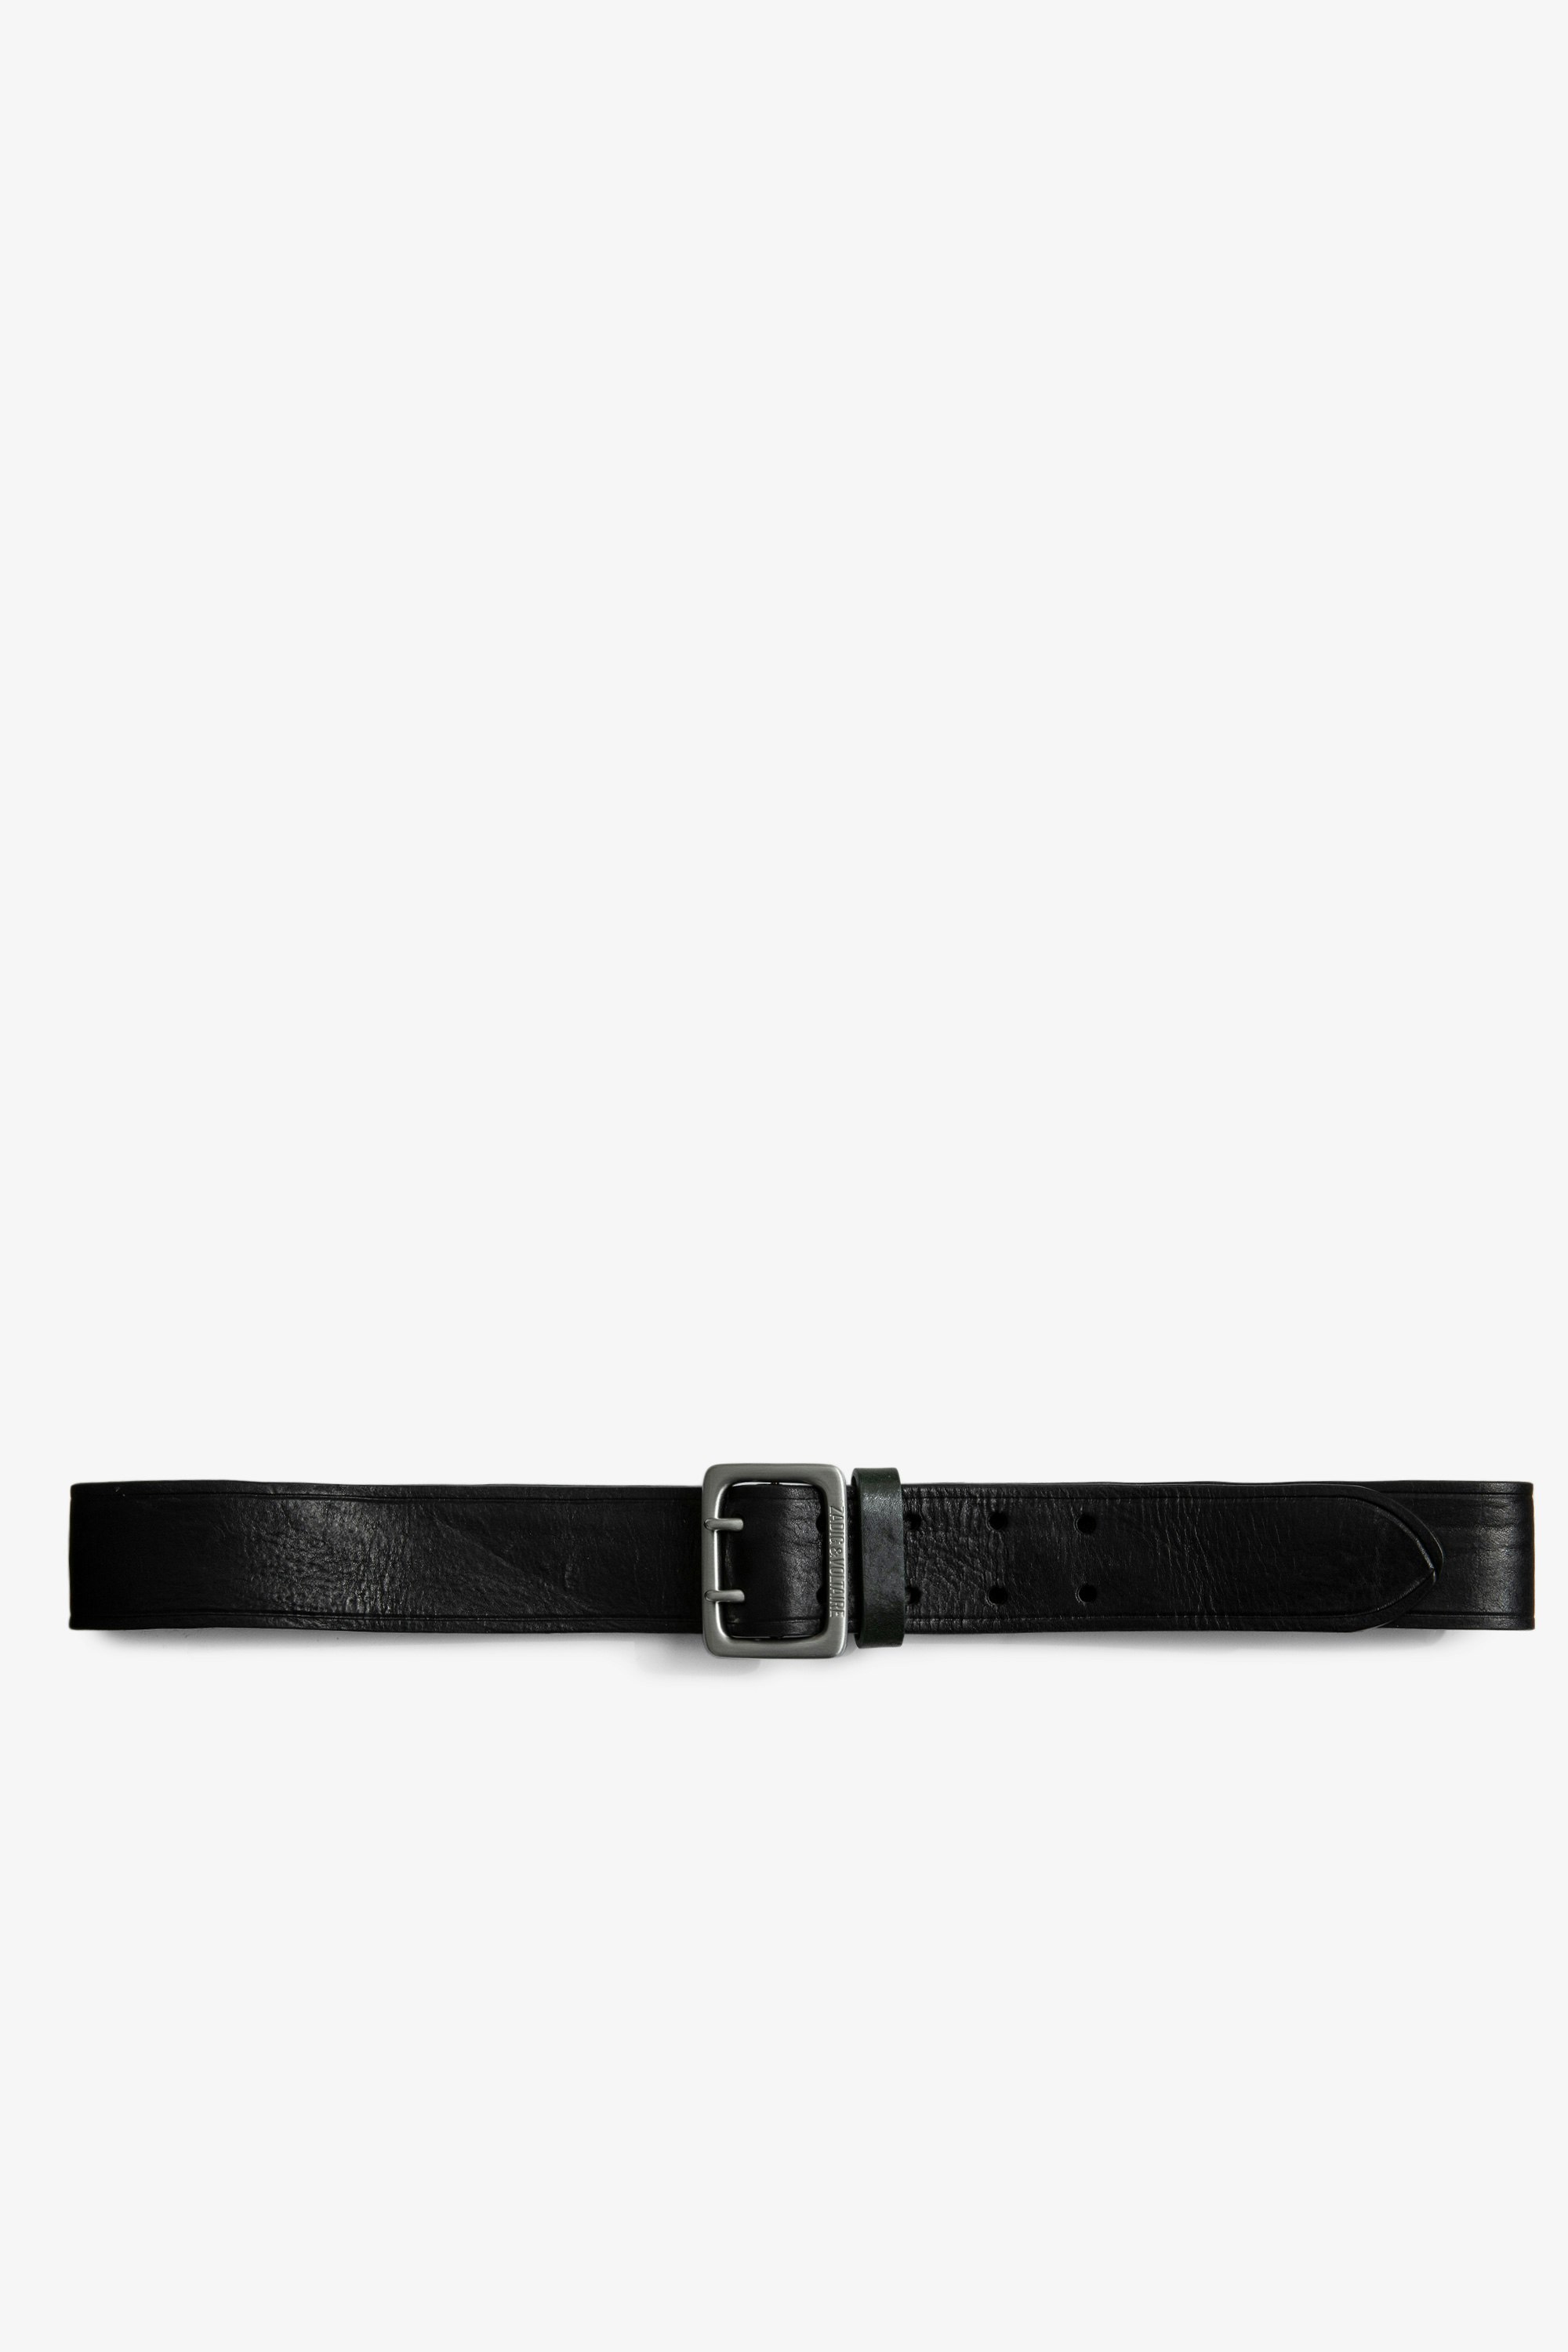 Buckley Belt Men's black leather belt with silver buckle